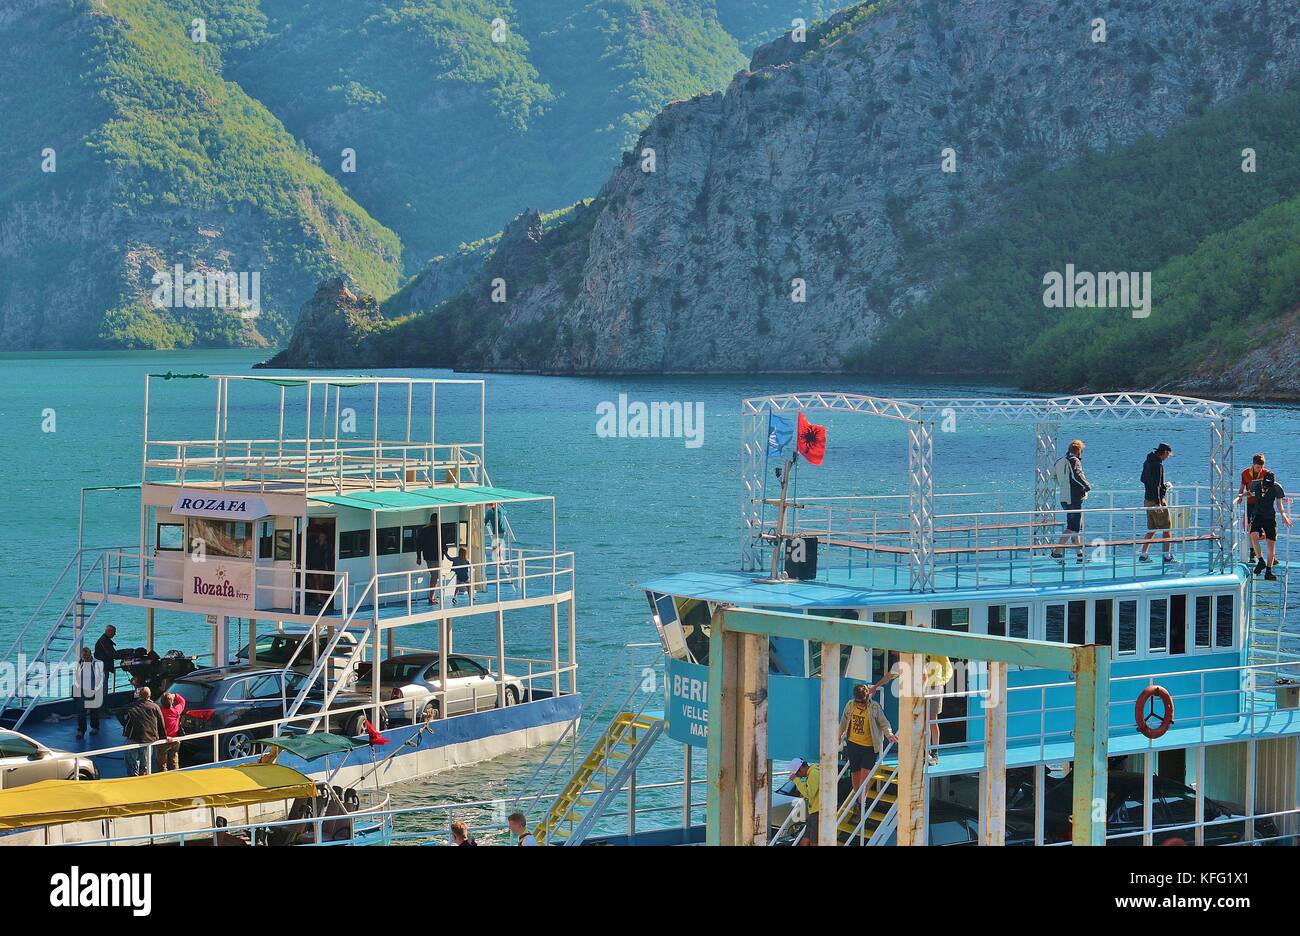 Ferries in the harbor of Koman, on Komani lake, 35 km long. A fascinating mountain world around. North Albania, Southeast Europe. Stock Photo